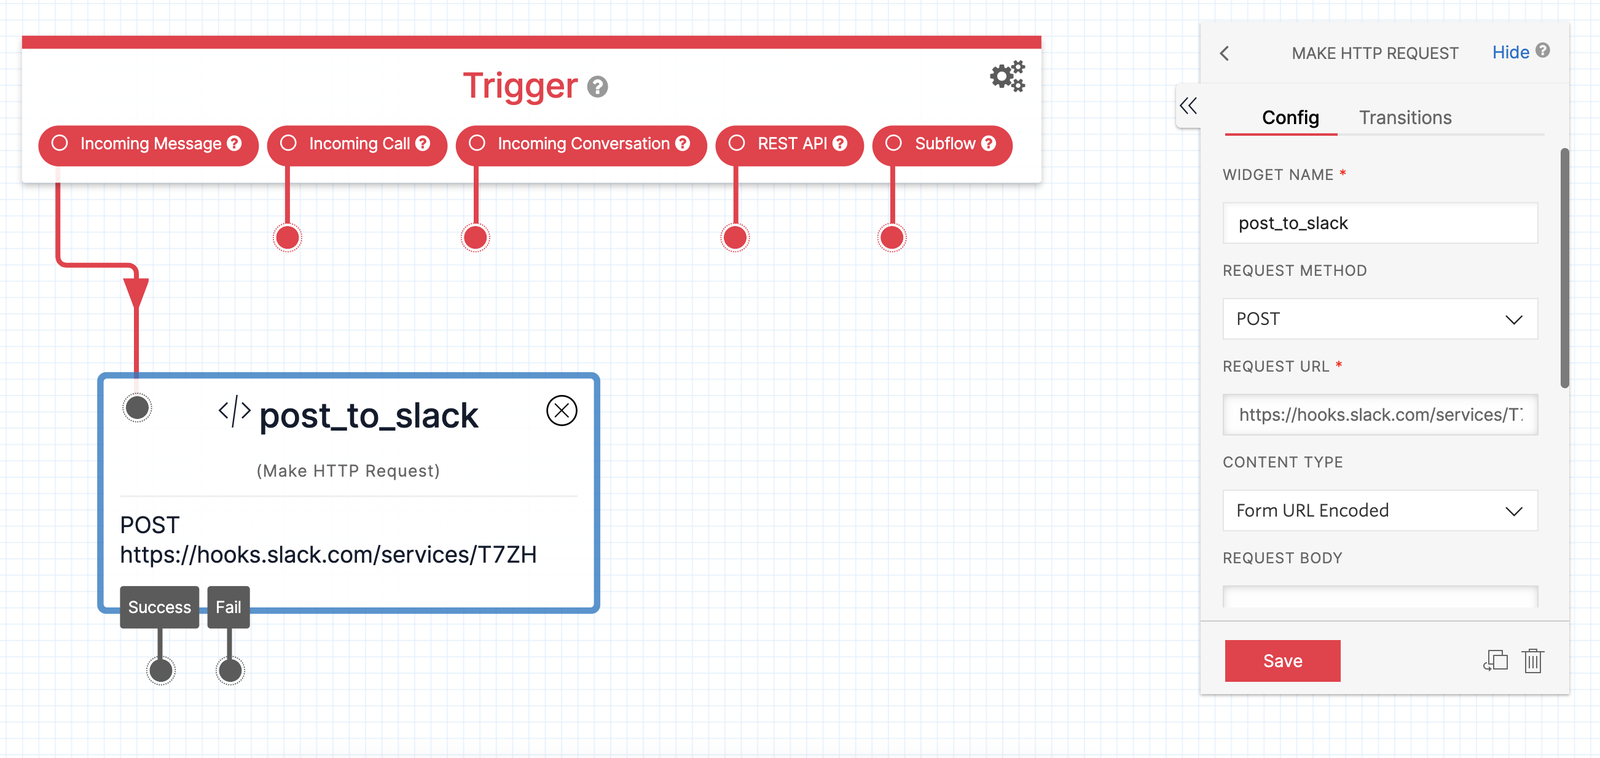 Twilio Studio Tutorial Post to Slack HTTP Request Widget with Webhook shown in configuration panel.